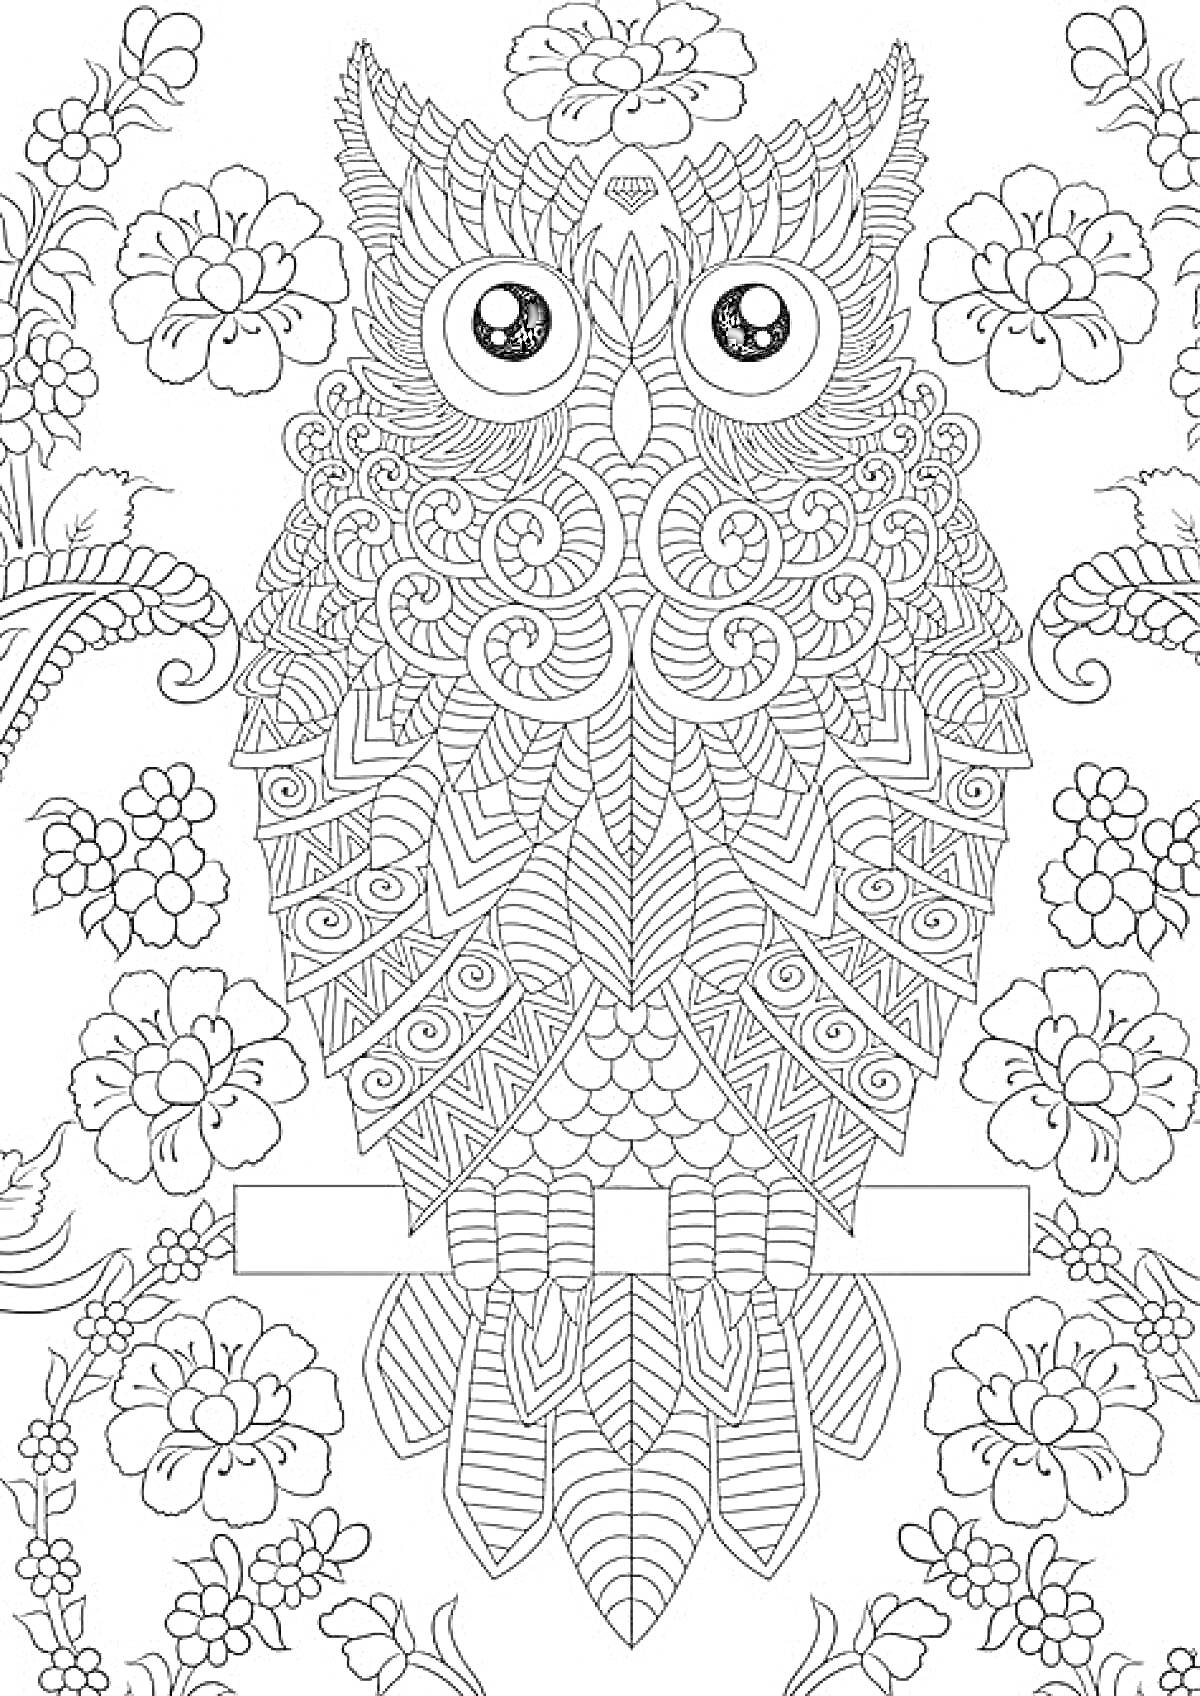 Раскраска Антистресс раскраска: сова с узорами в окружении цветов